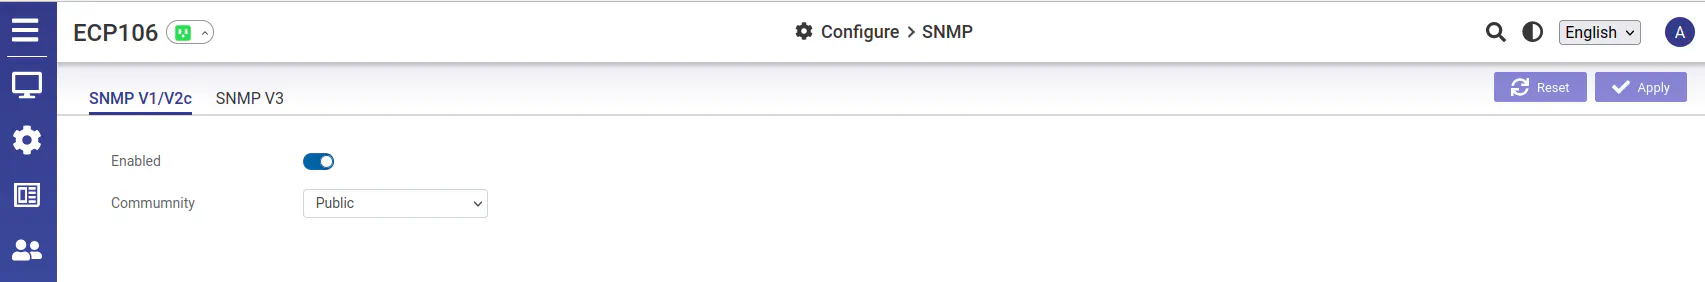 Standalone Configure SNMP